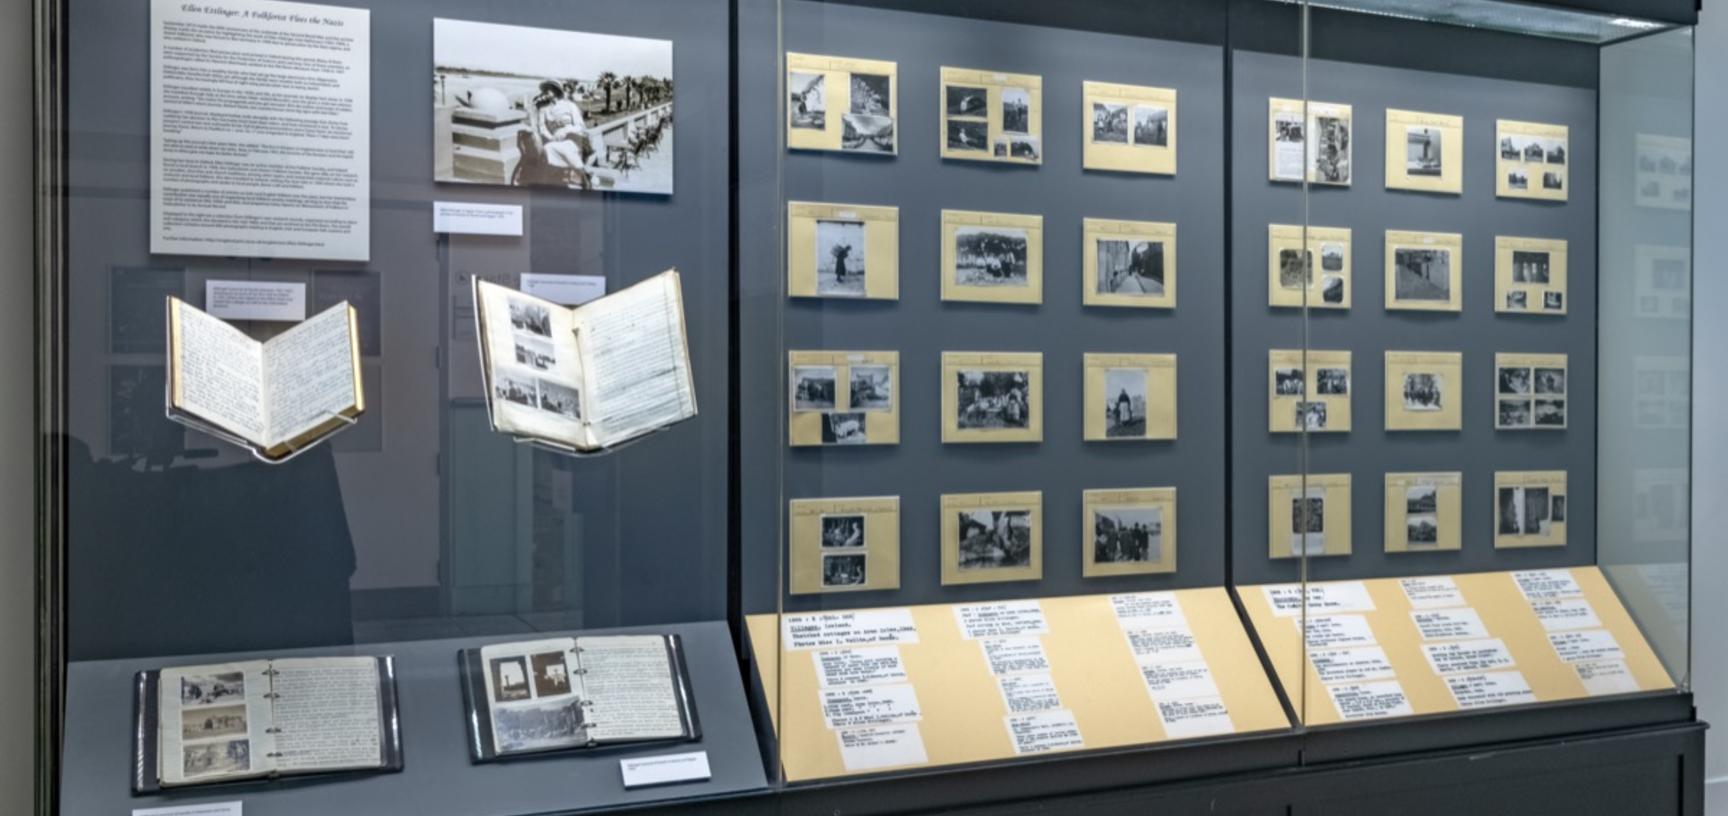 ‘Ellen Ettlinger: A Folklorist Flees the Nazis’ exhibition gallery at Pitt Rivers Museum